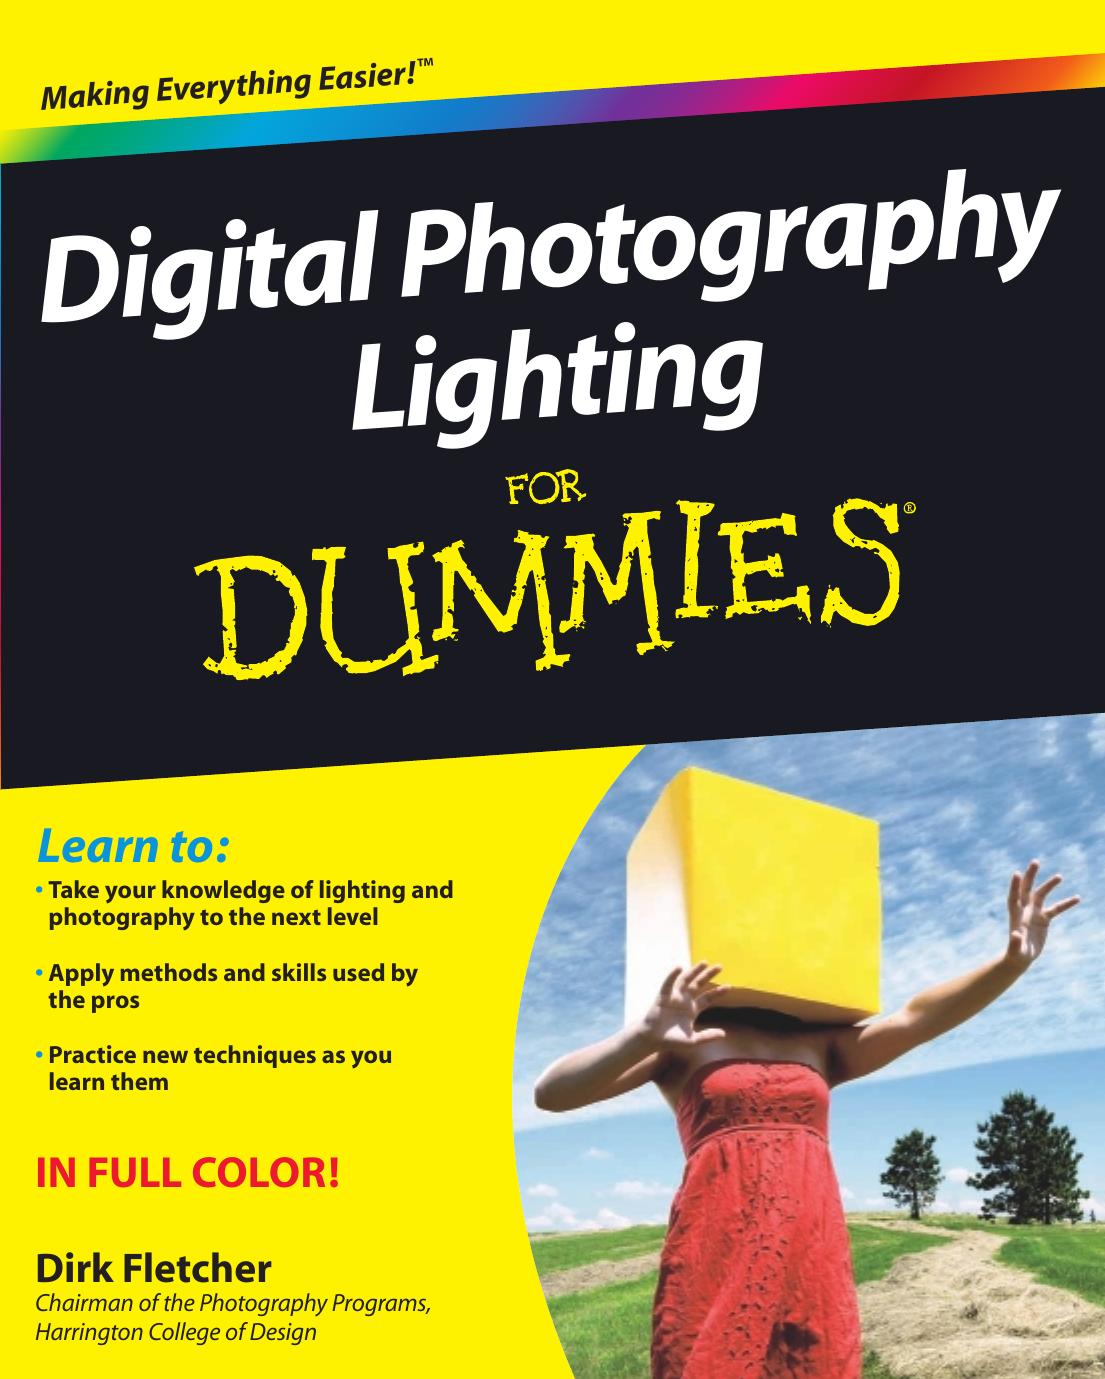 Digital Photography Lighting For Dummies by Dirk Fletcher